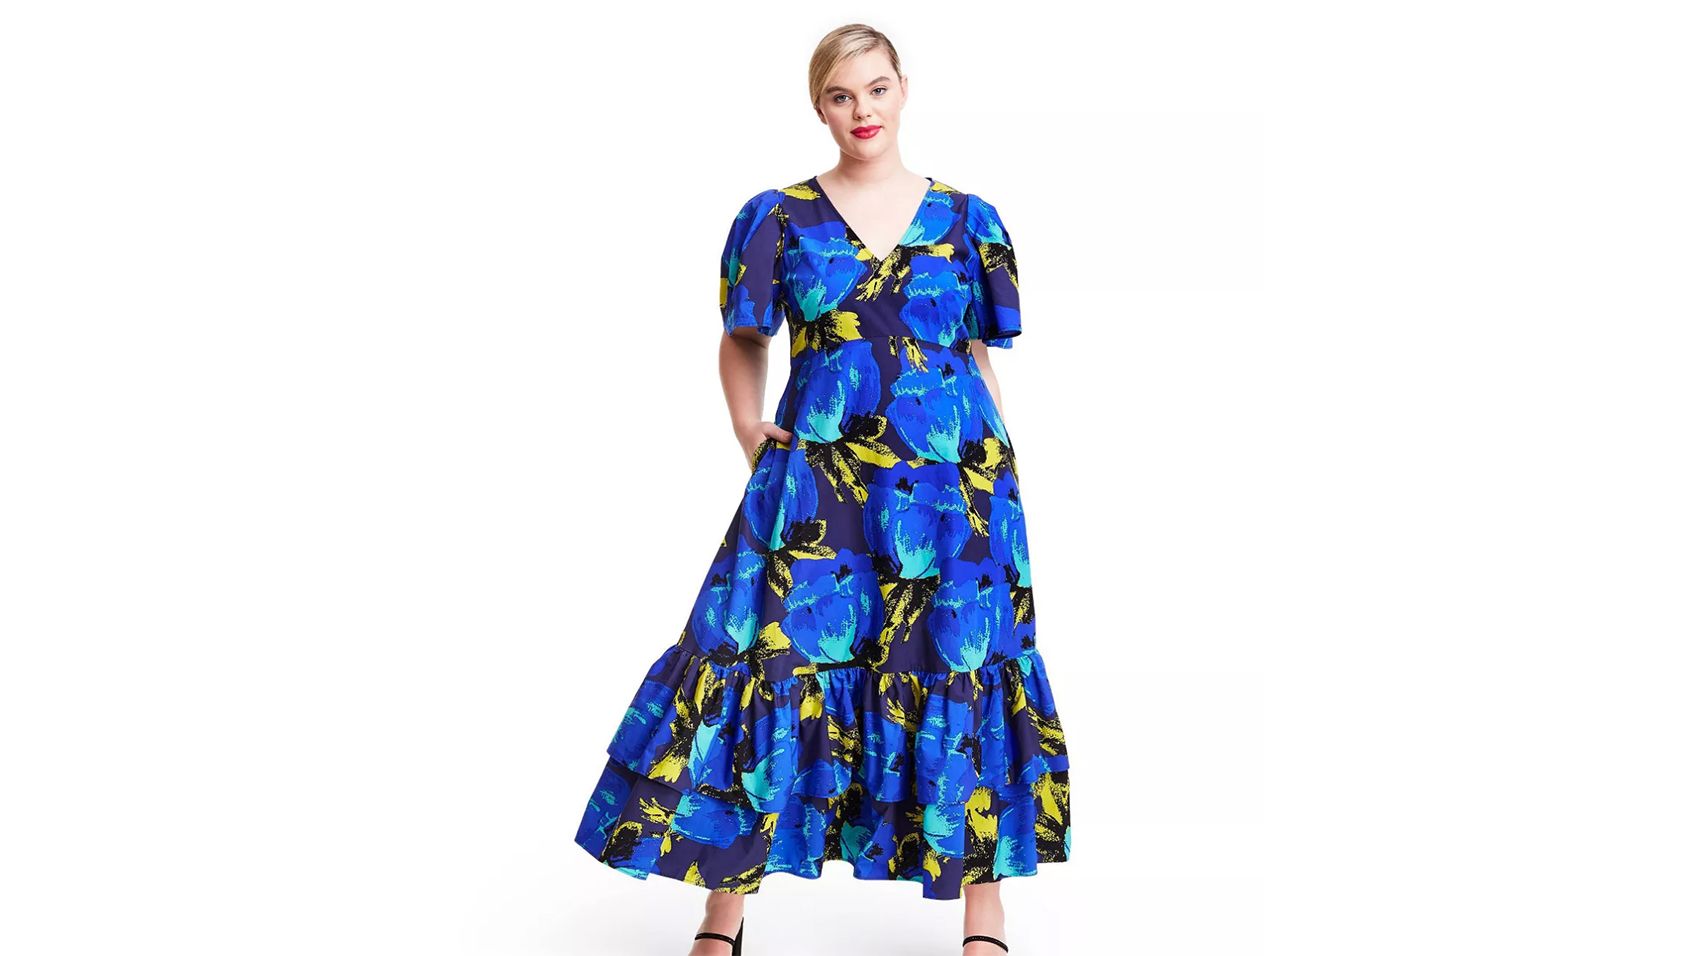 XXL Just Be You Lace Detail Print Dress blue floral S M 